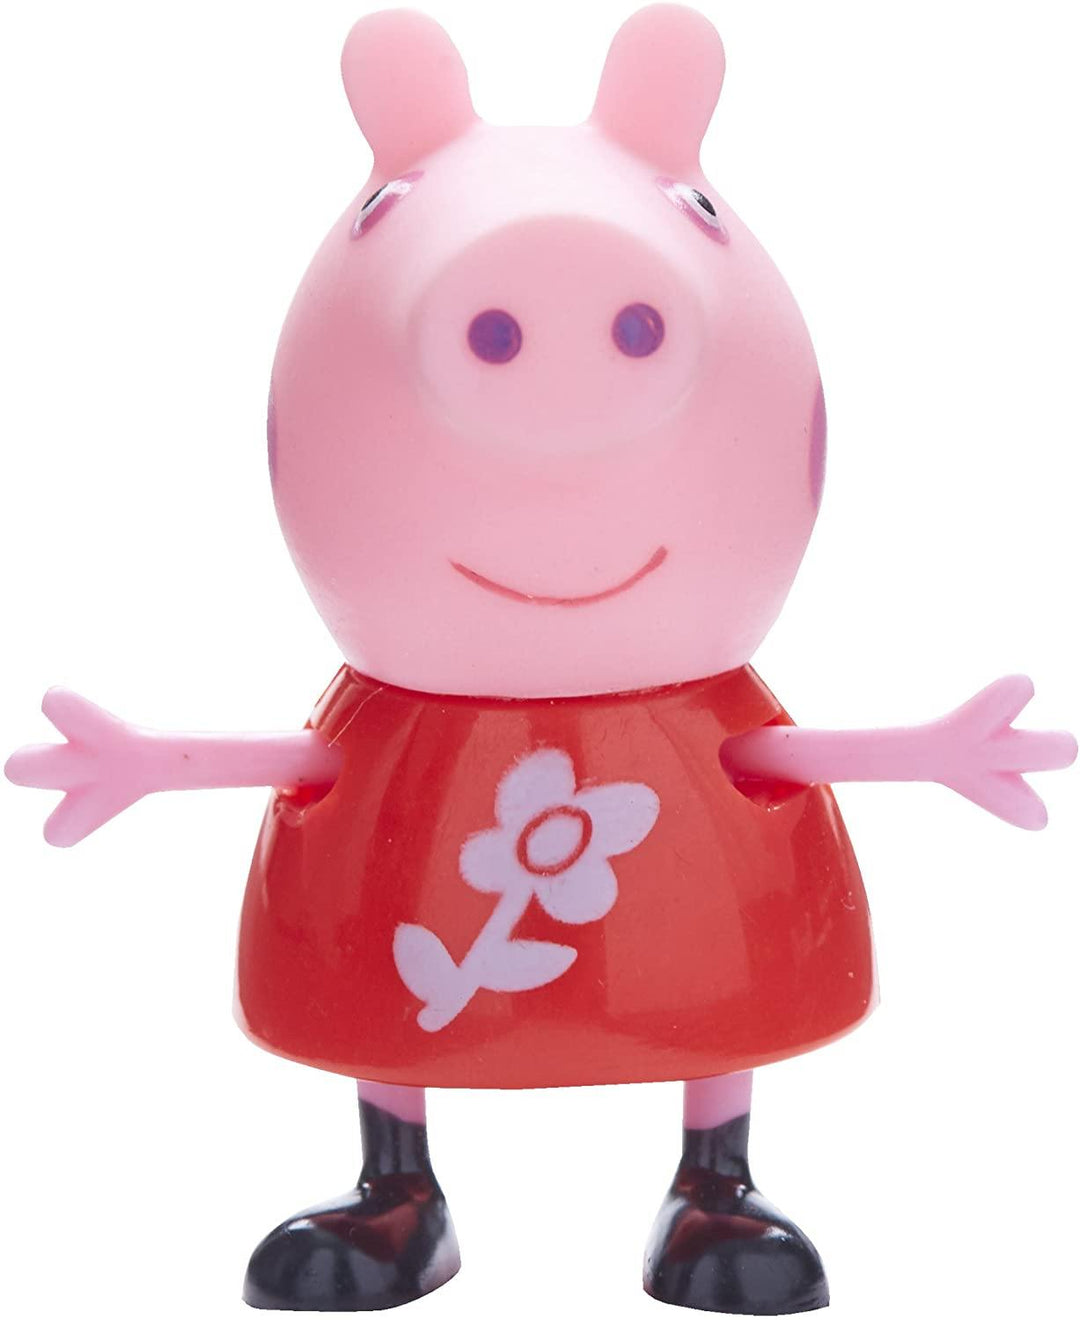 Peppa Pig 06666 Family Figures Pack - Yachew